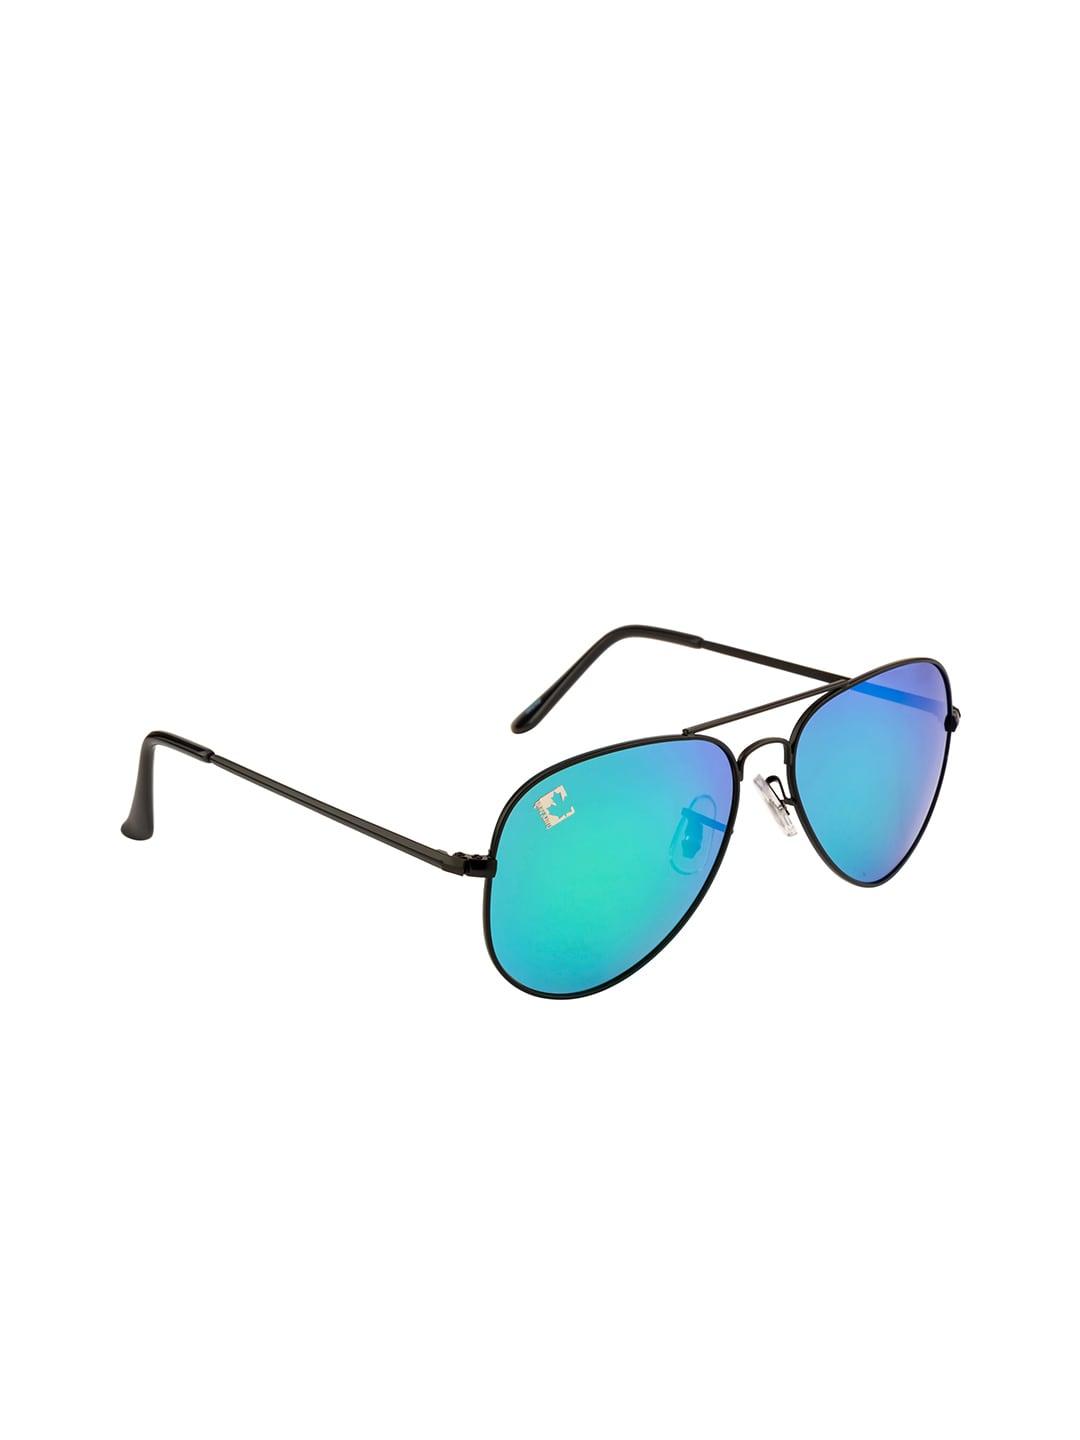 clark n palmer unisex green lens & black aviator sunglasses with polarised and uv protected lens